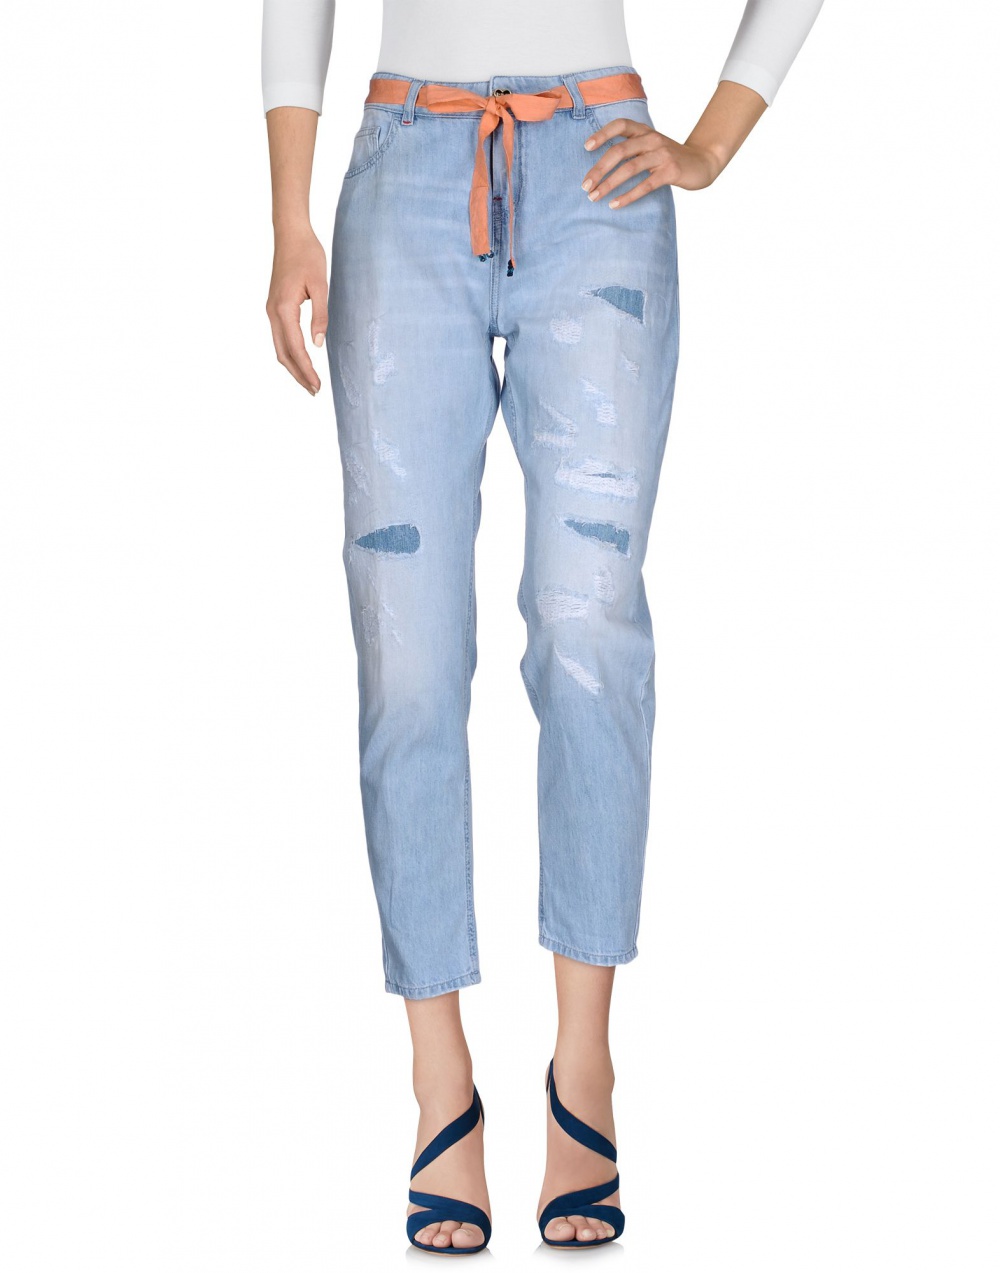 Новые джинсы TWIN-SET JEANS 29 размер